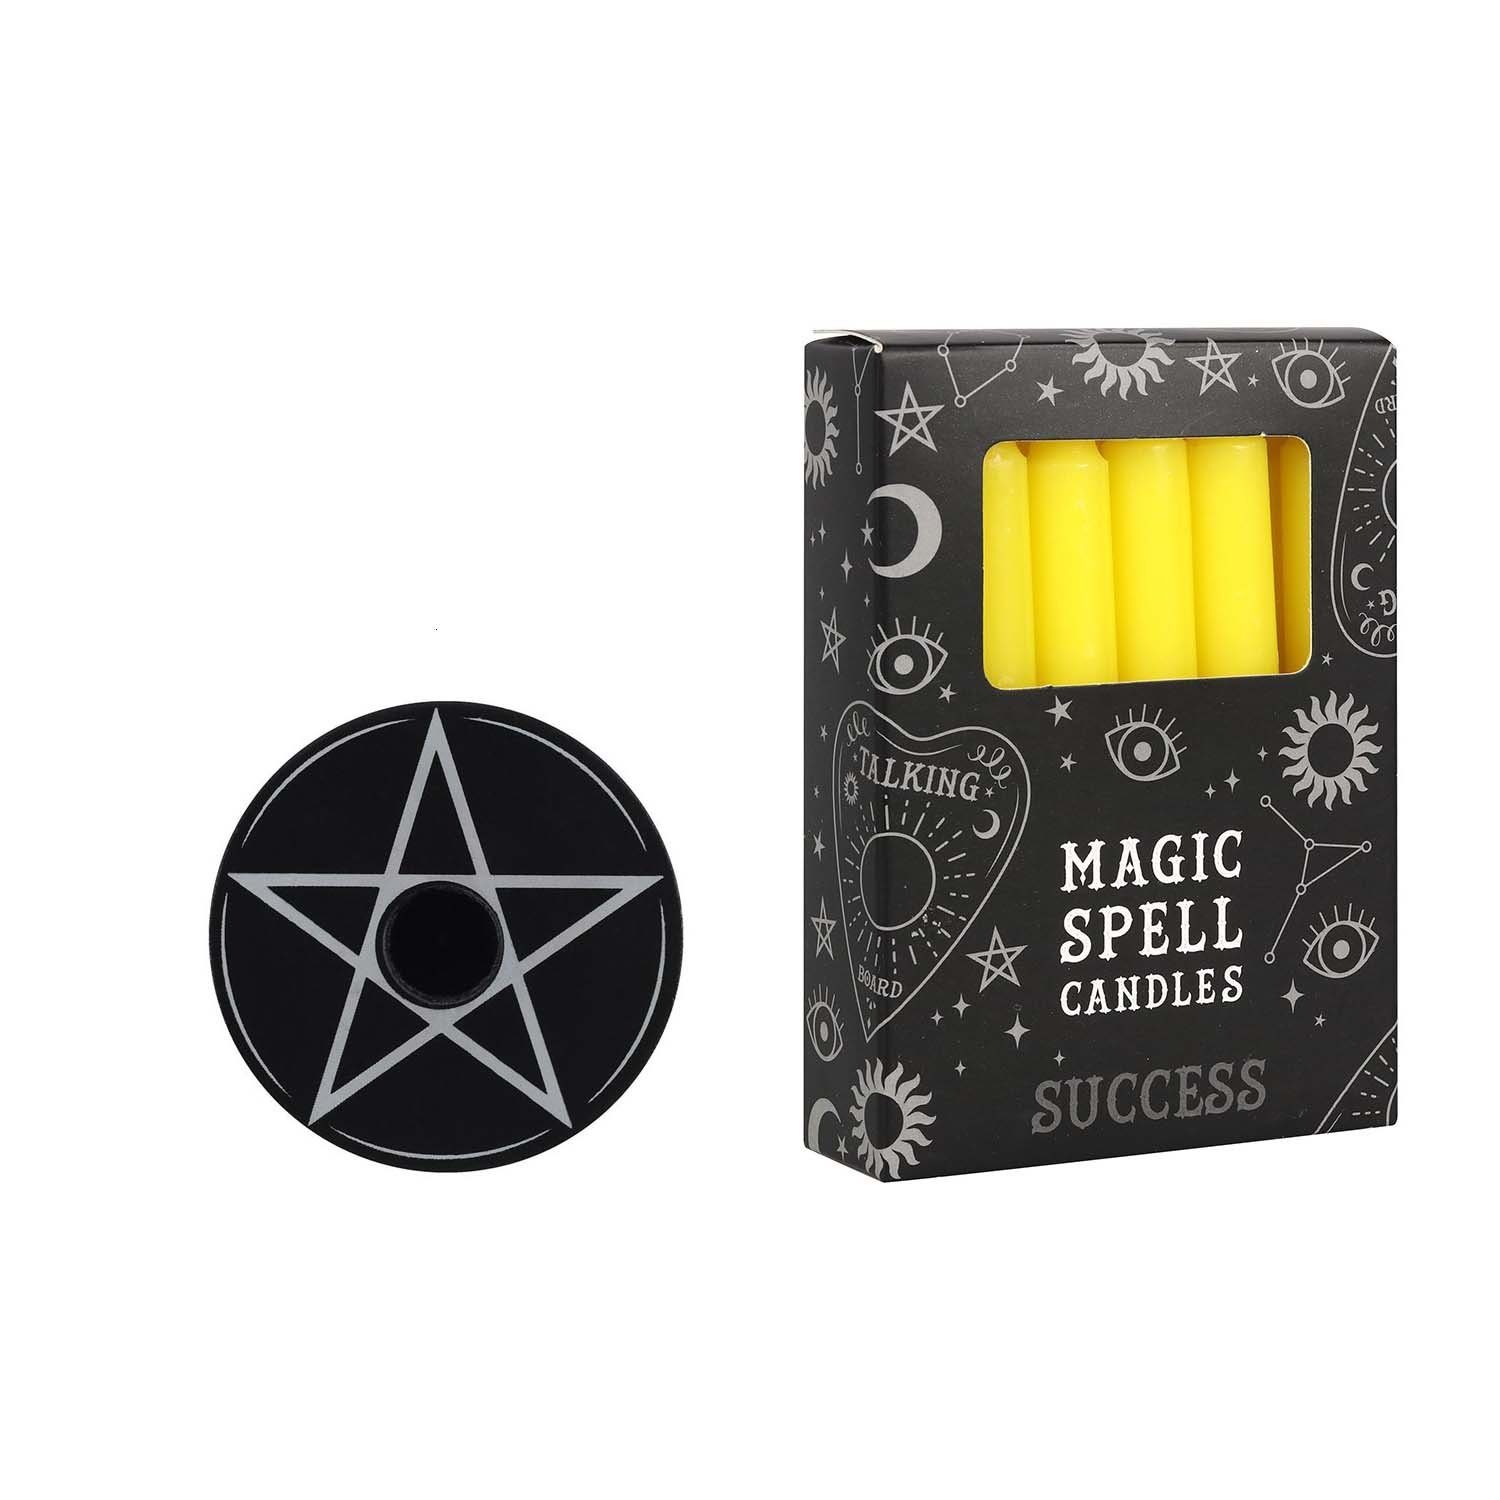 Hexe, Spell "Pentagram" Halter Wunschkerzen, - Kerzenhalter Black MystiCalls Candler Magic, Witchcraft Success